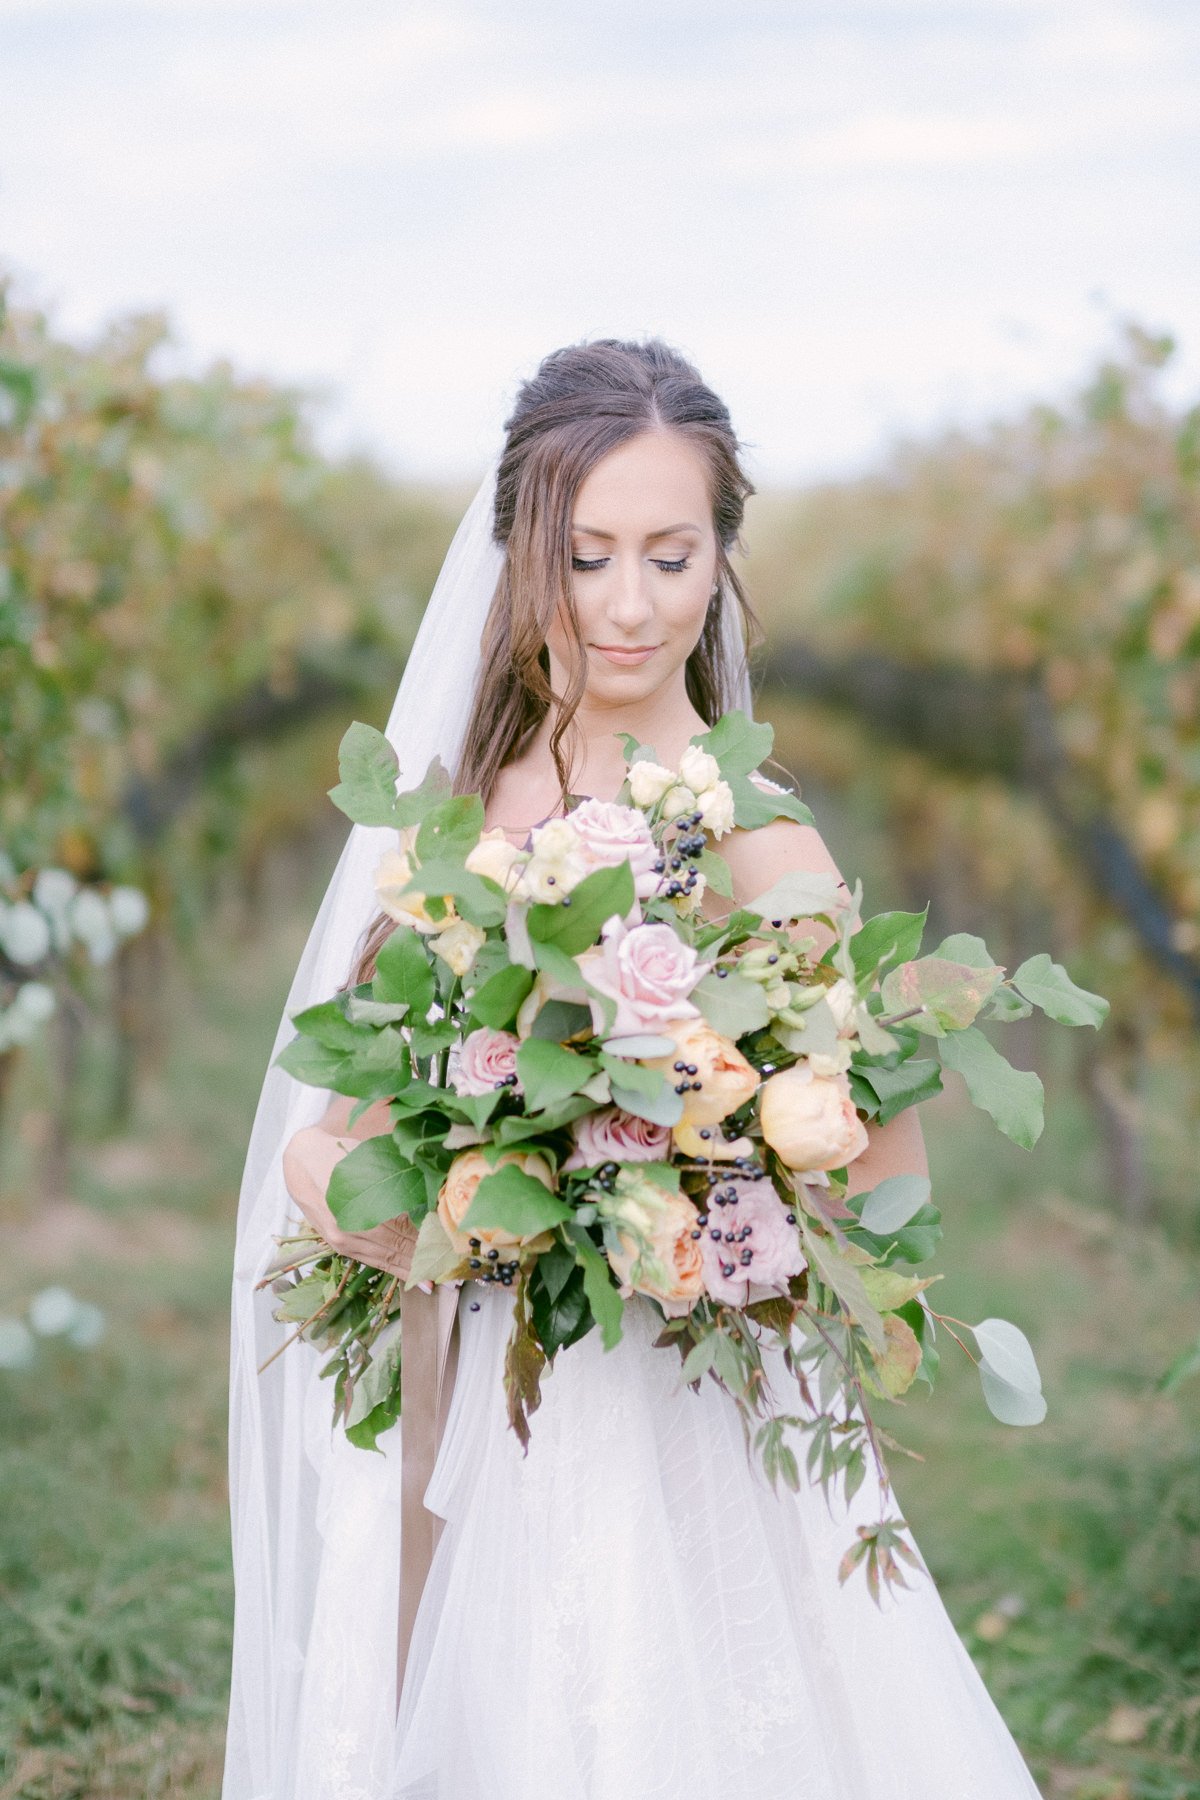 Ravine-Vineyard-Editorial-Wedding-Vineyard-Bride-Photo-By-Paolo-Manrique-Photography-0086.JPG